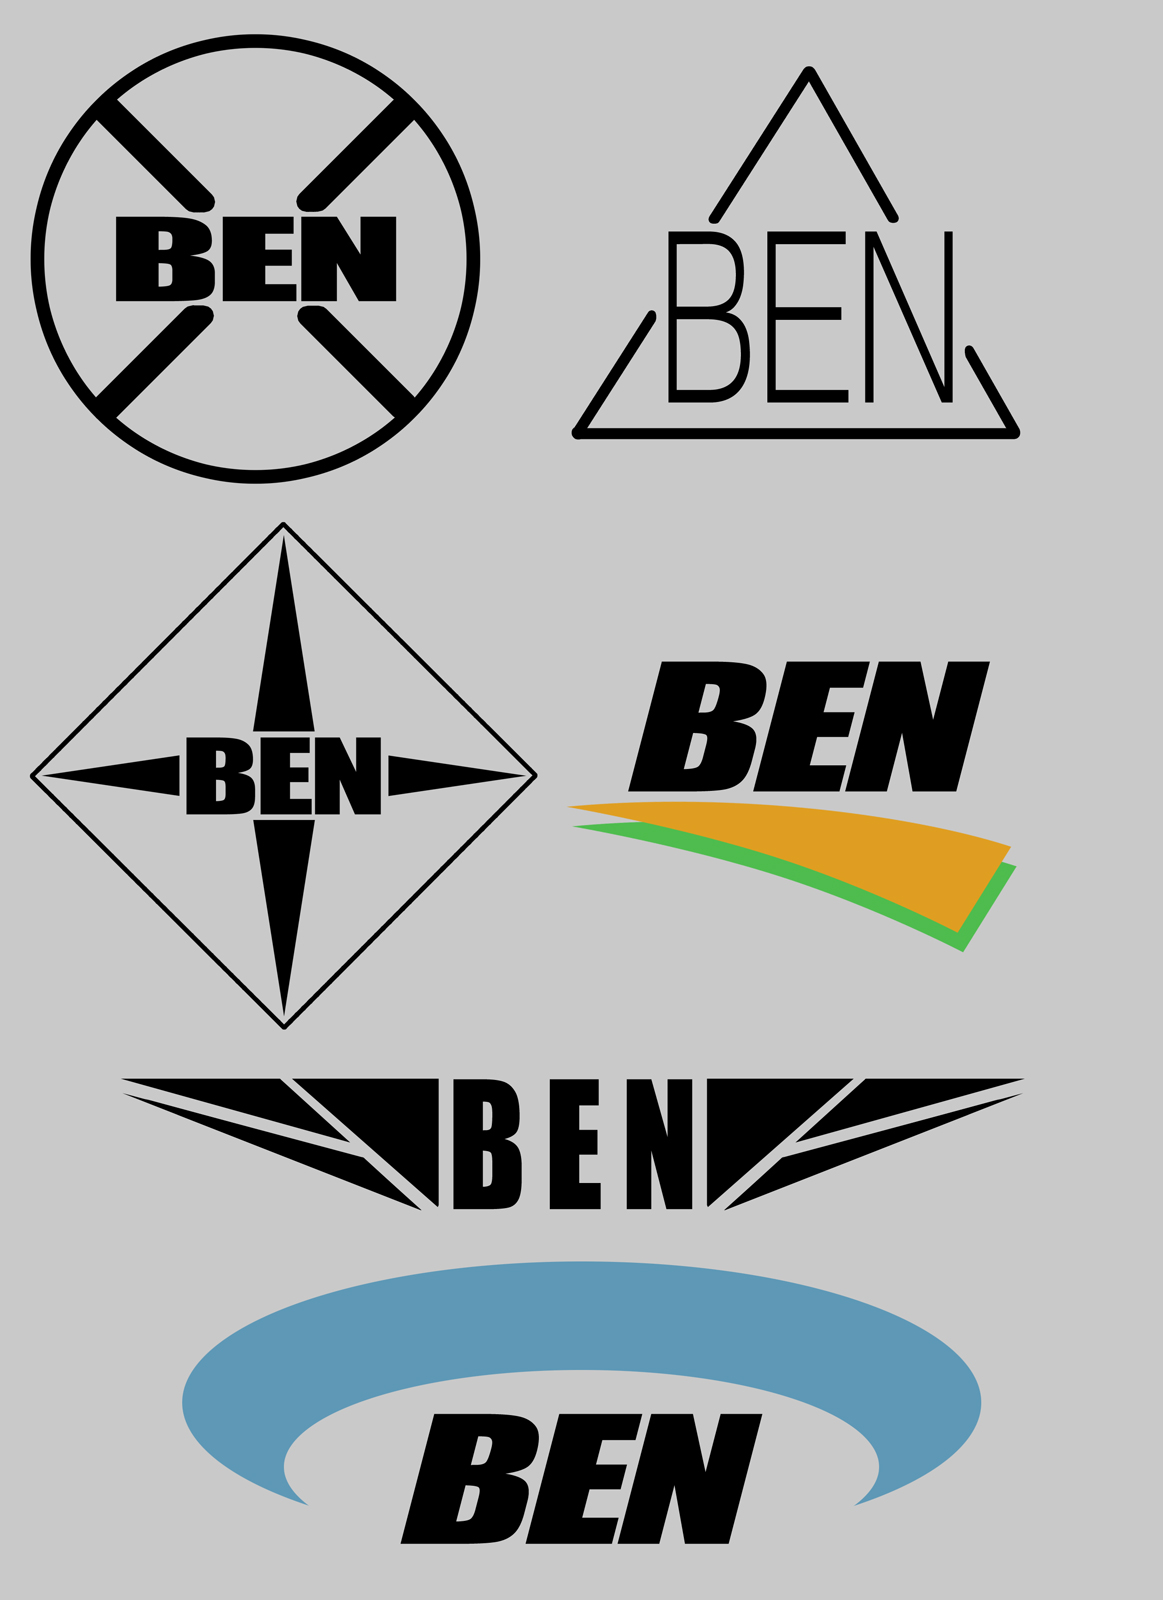 Toby-Gray-Ben-logos-1